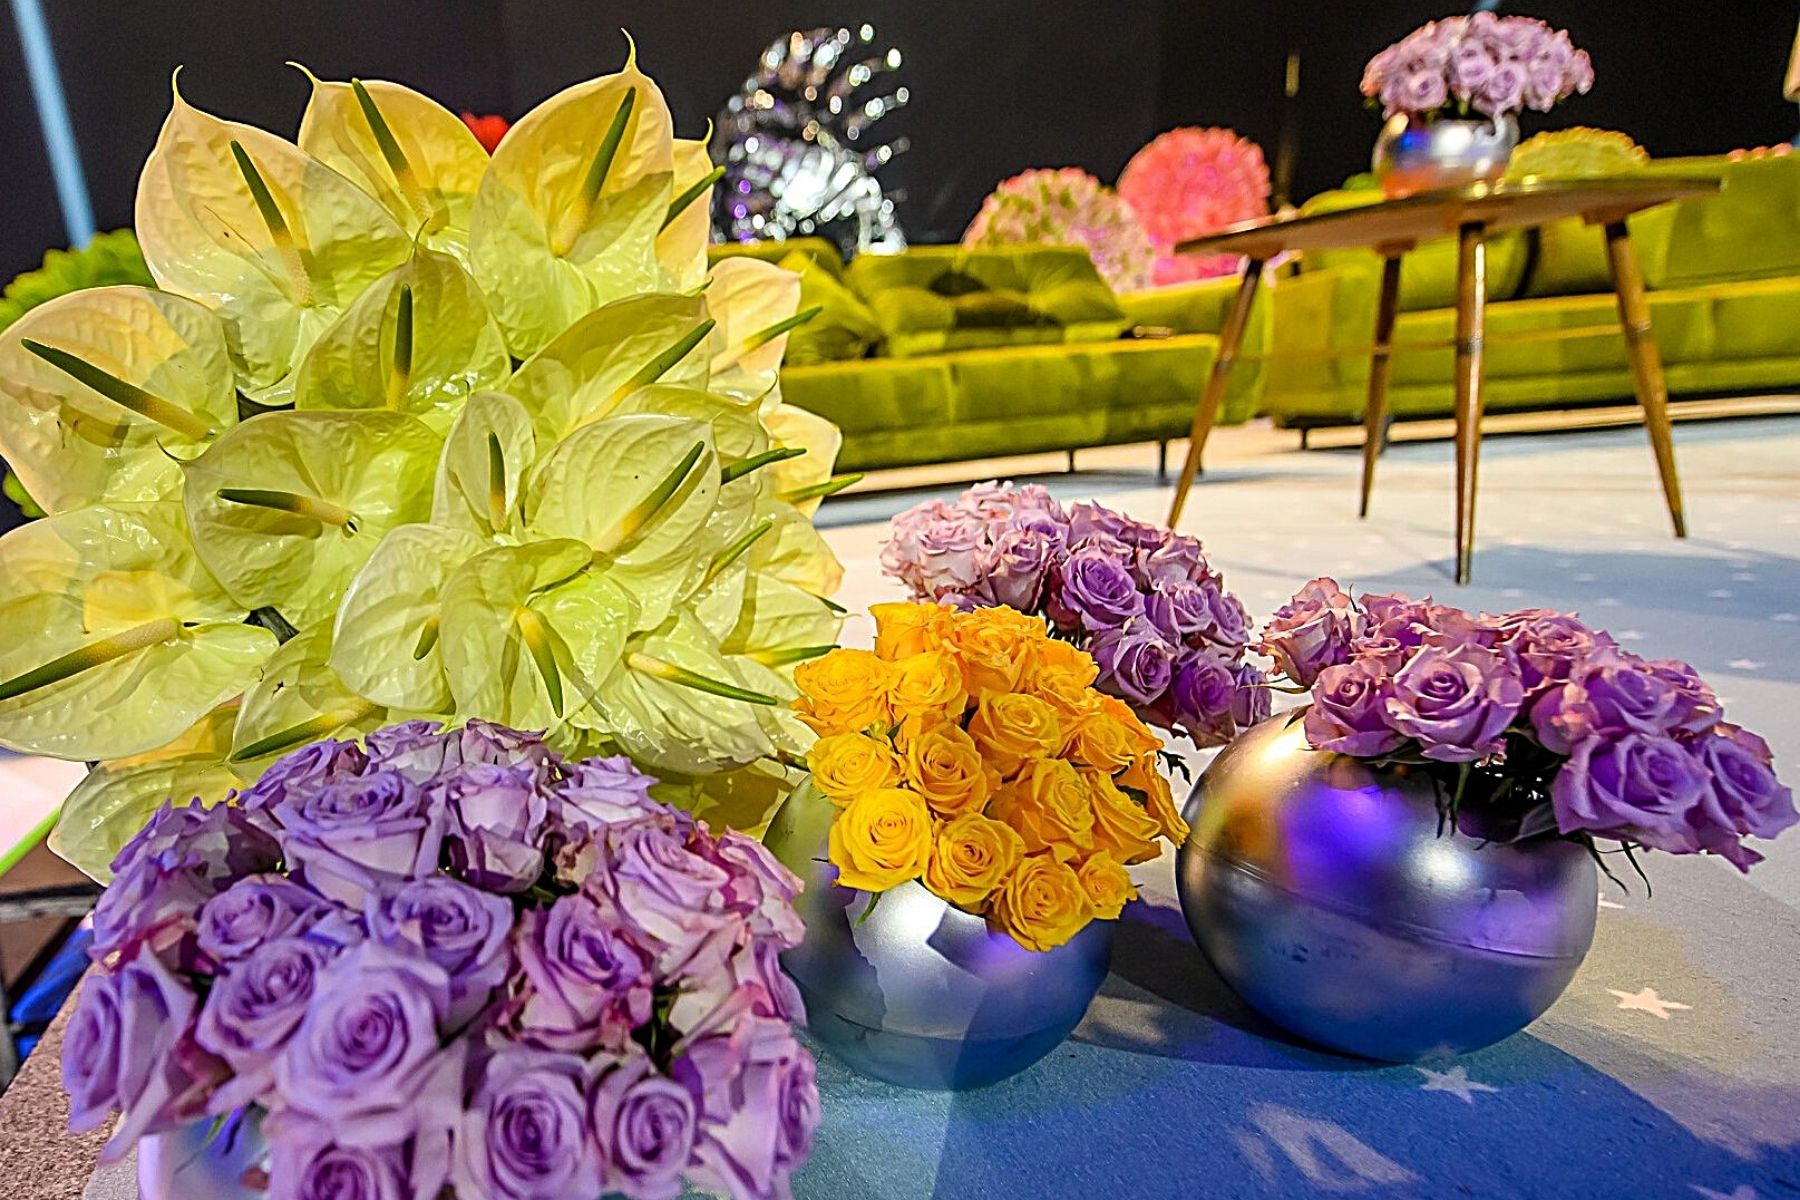 Flower arrangement in balls